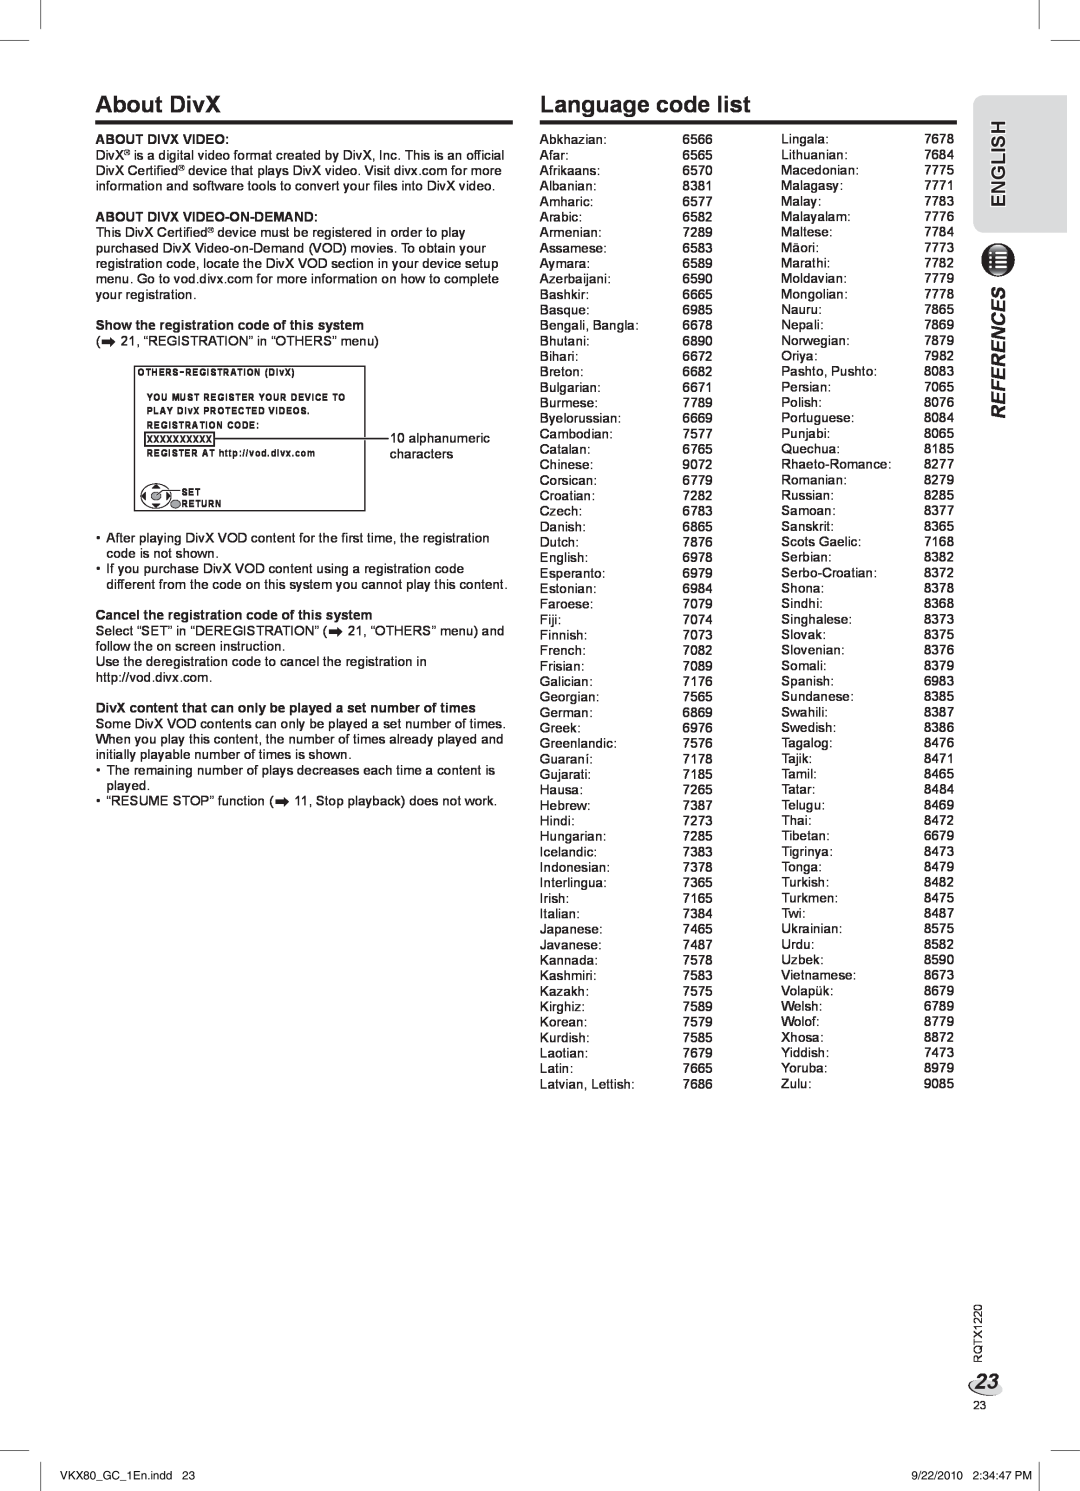 Panasonic SC-VKX80 manual About DivX, Language code list, English, References 